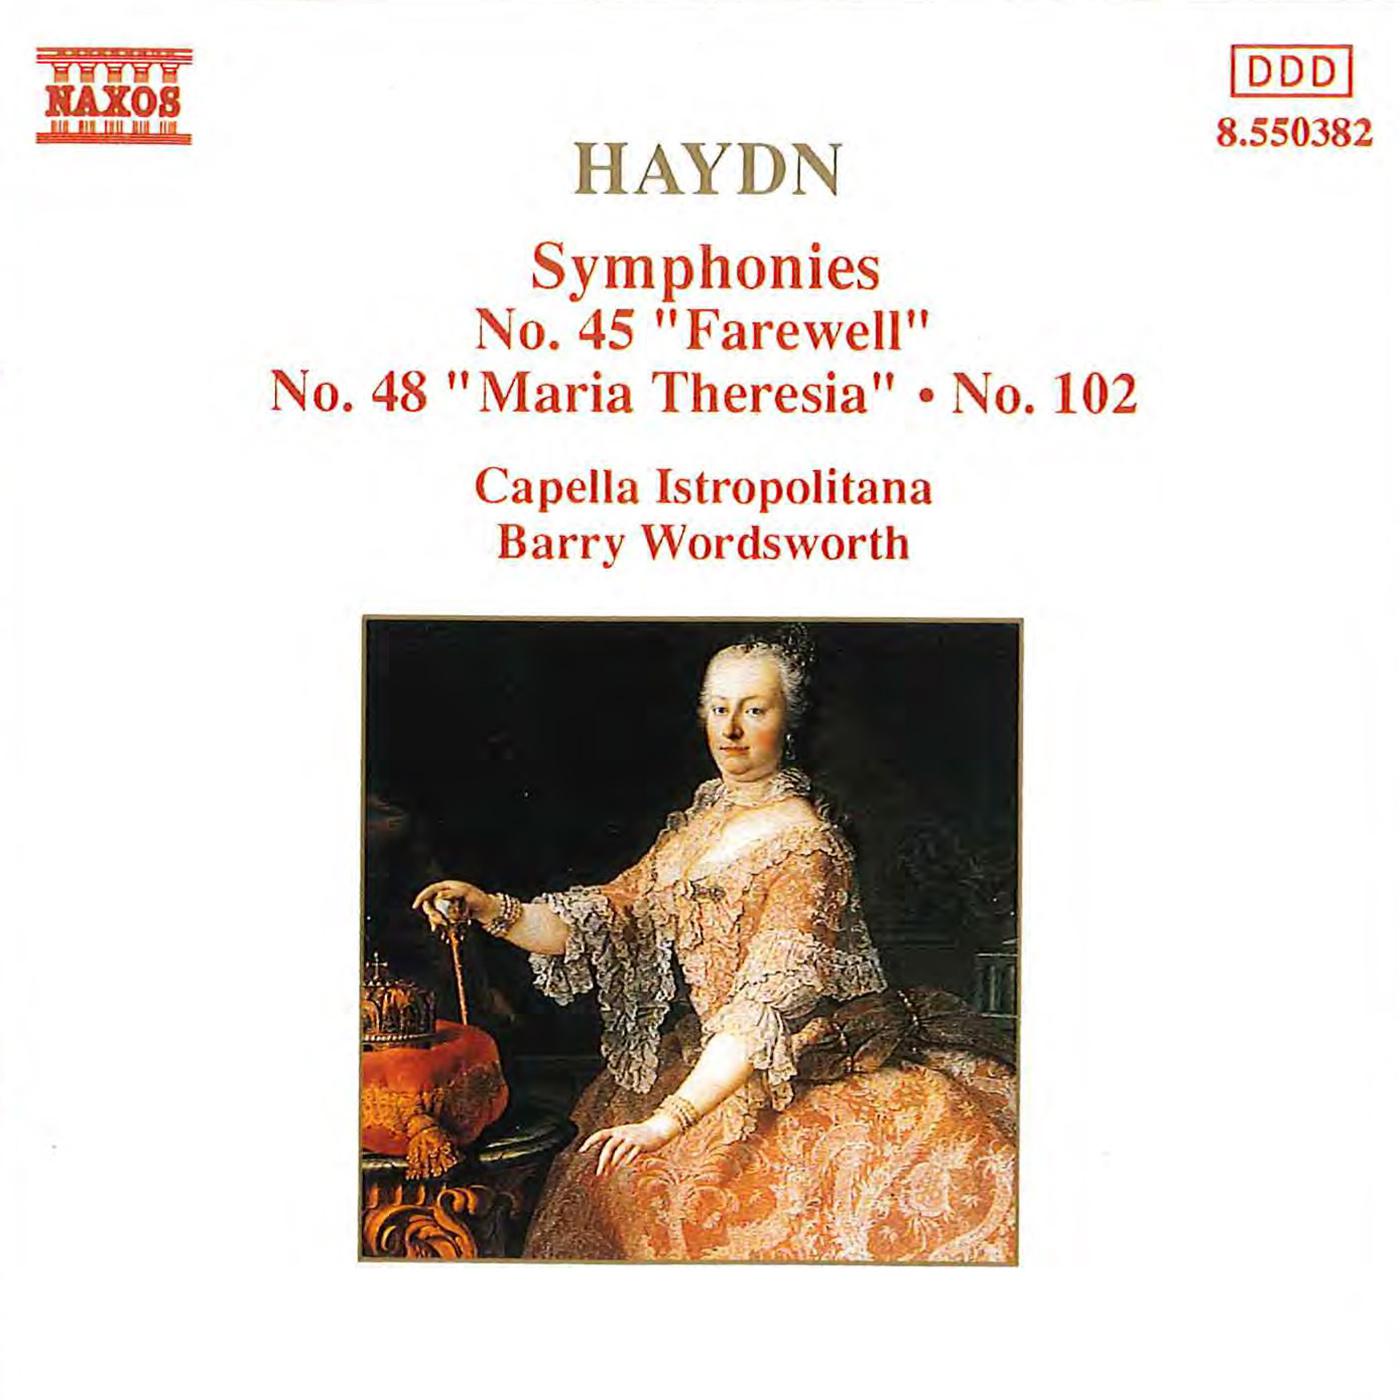 Symphony No. 48 in C Major, Hob.I:48, "Maria Theresa":II. Adagio